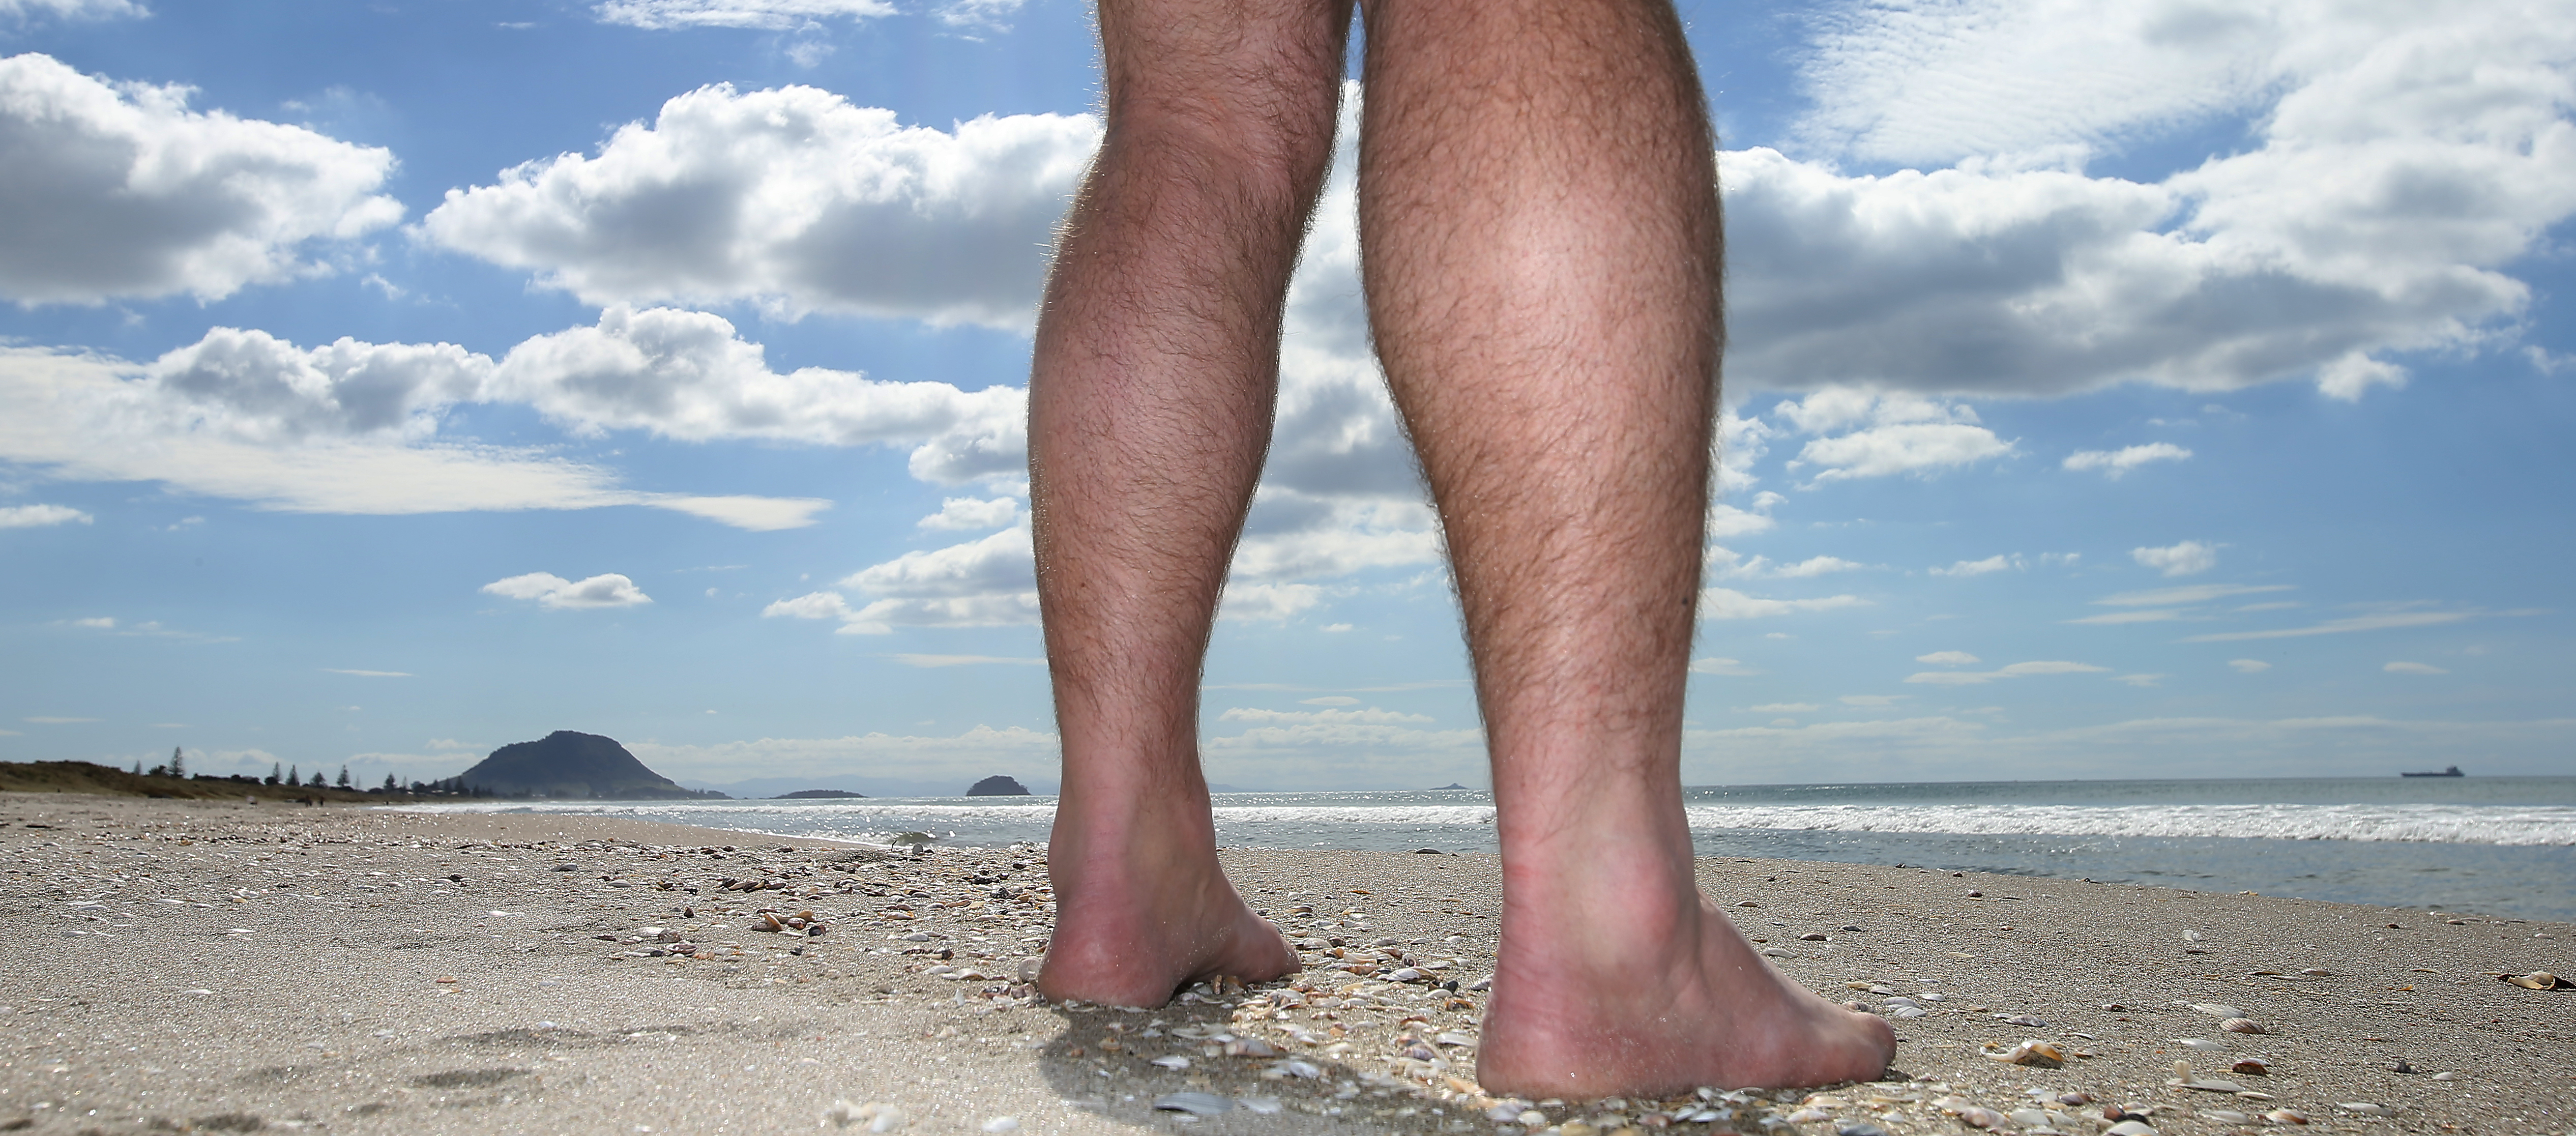 Latina Naturist Beach - Nudist bather saves family from rip tide as UK beaches overrun - NZ Herald